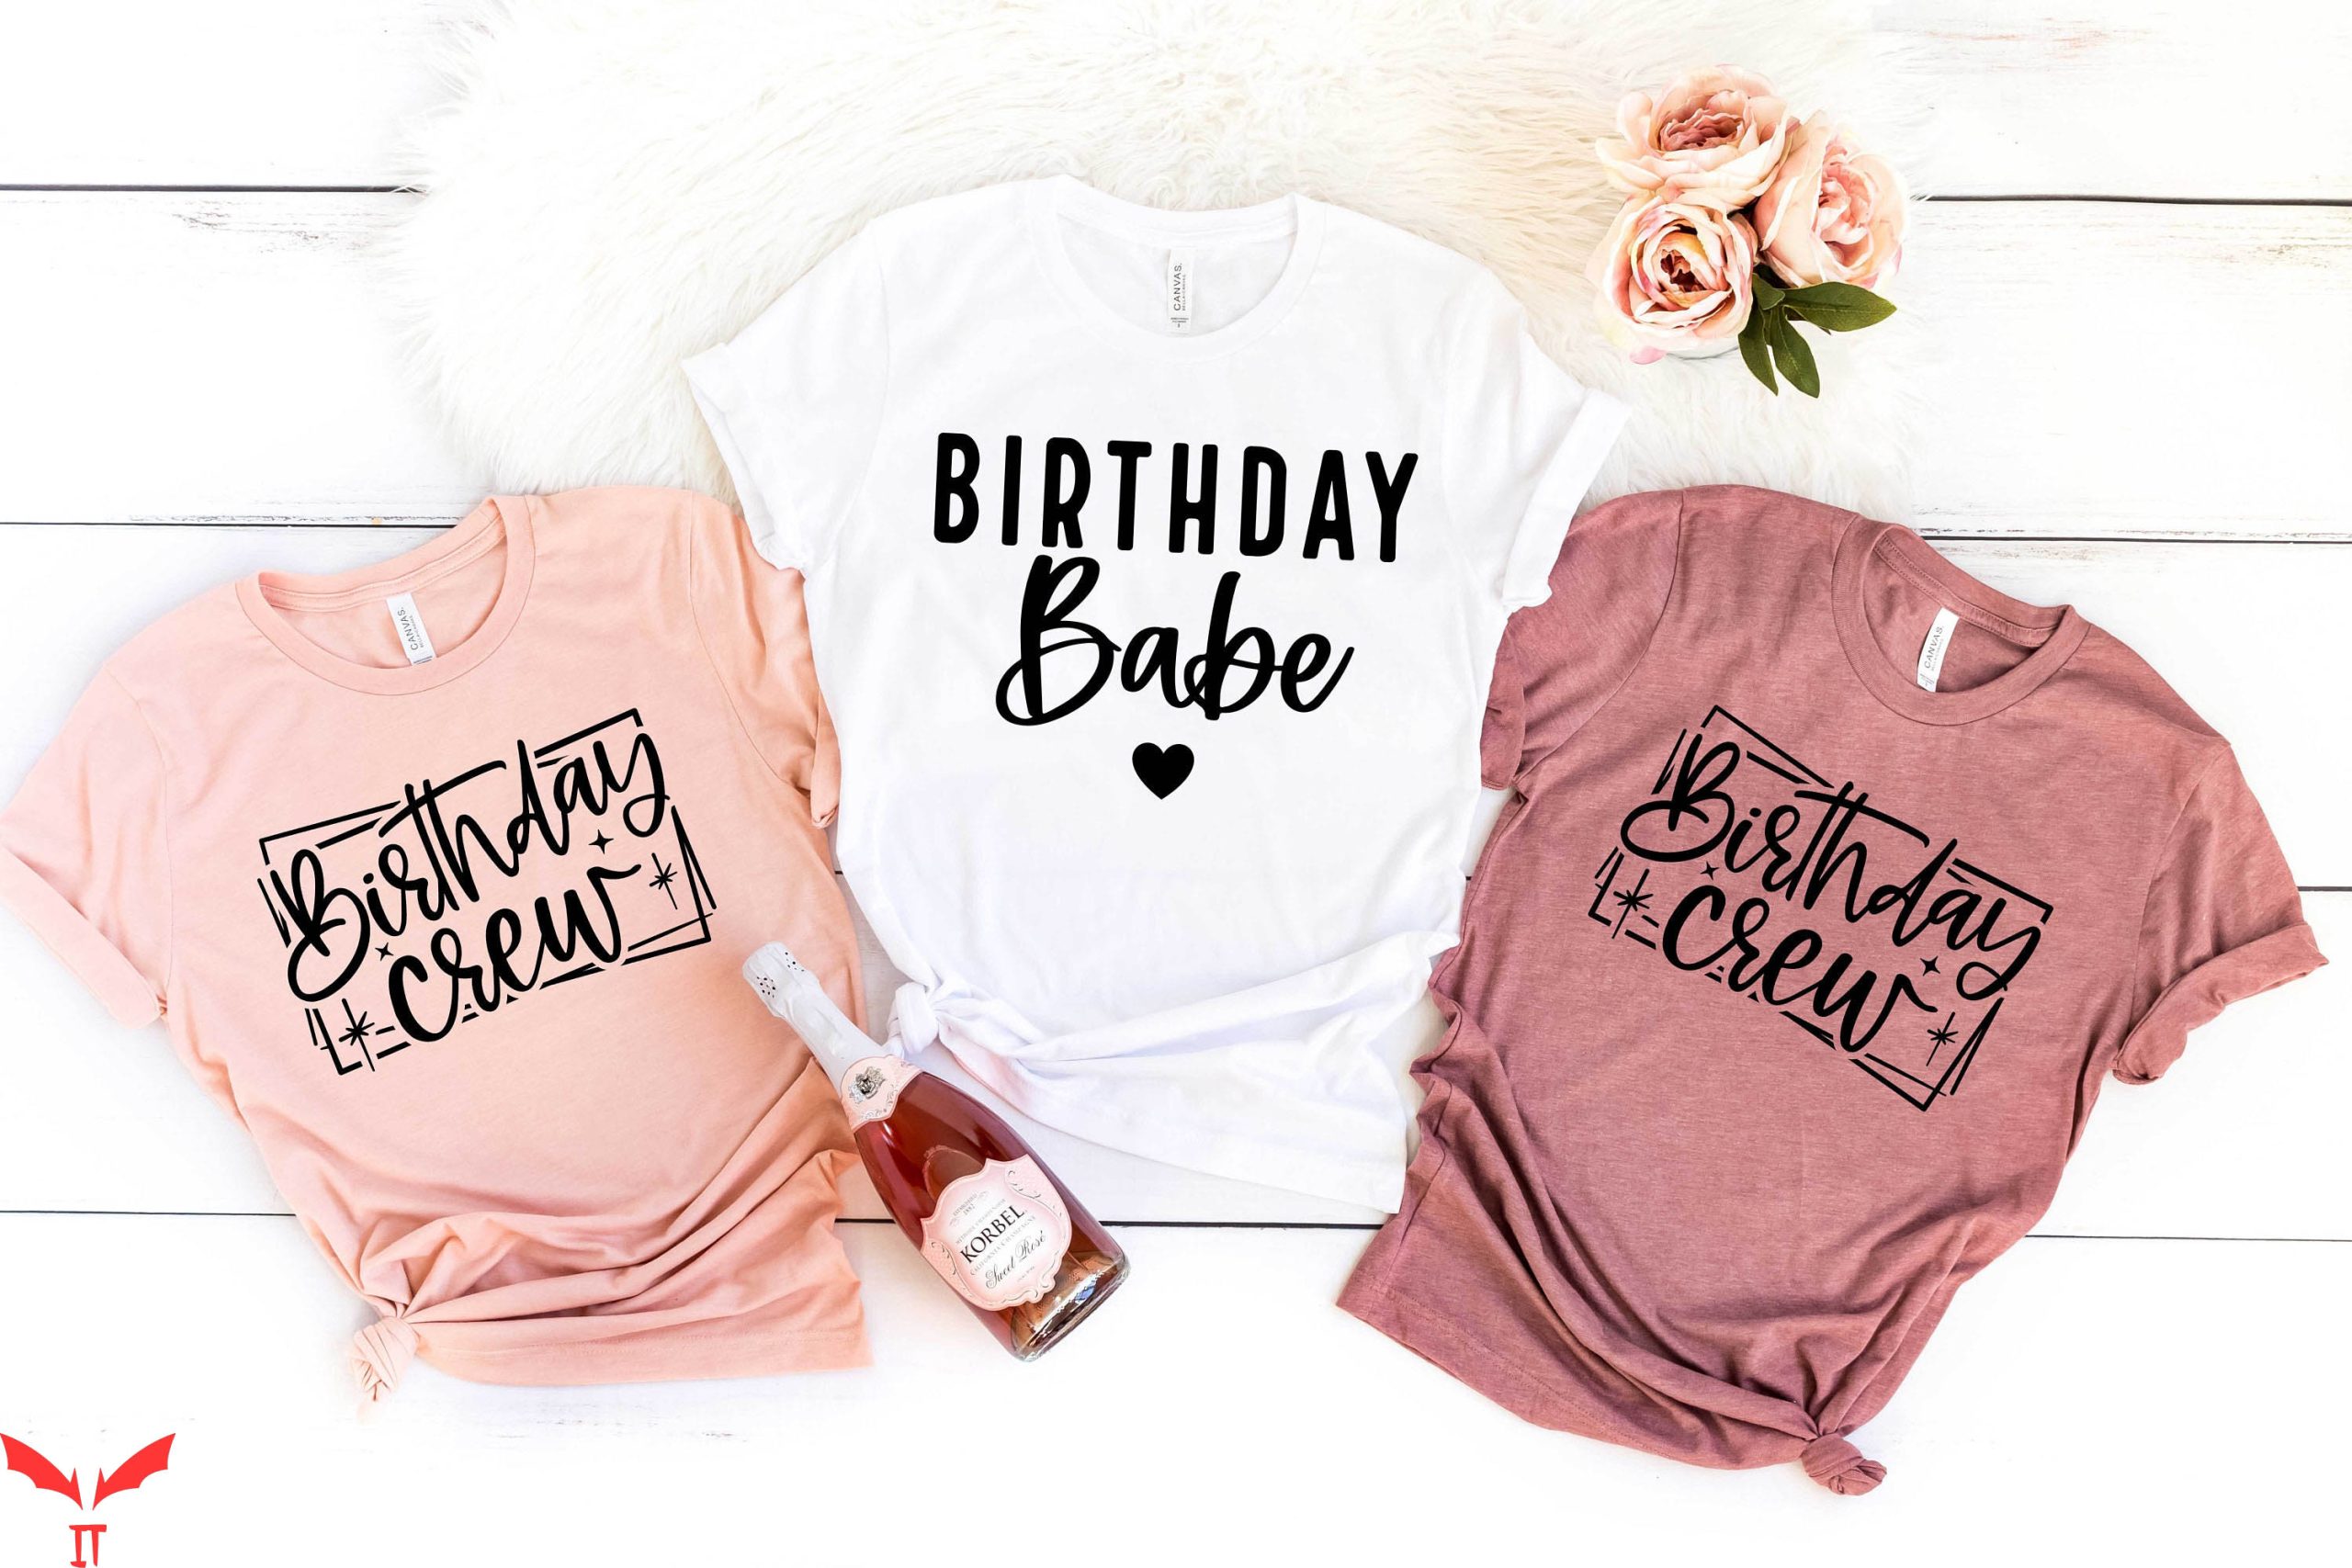 Barbie Birthday T-Shirt Birthday Party Cool Girly Tee Shirt